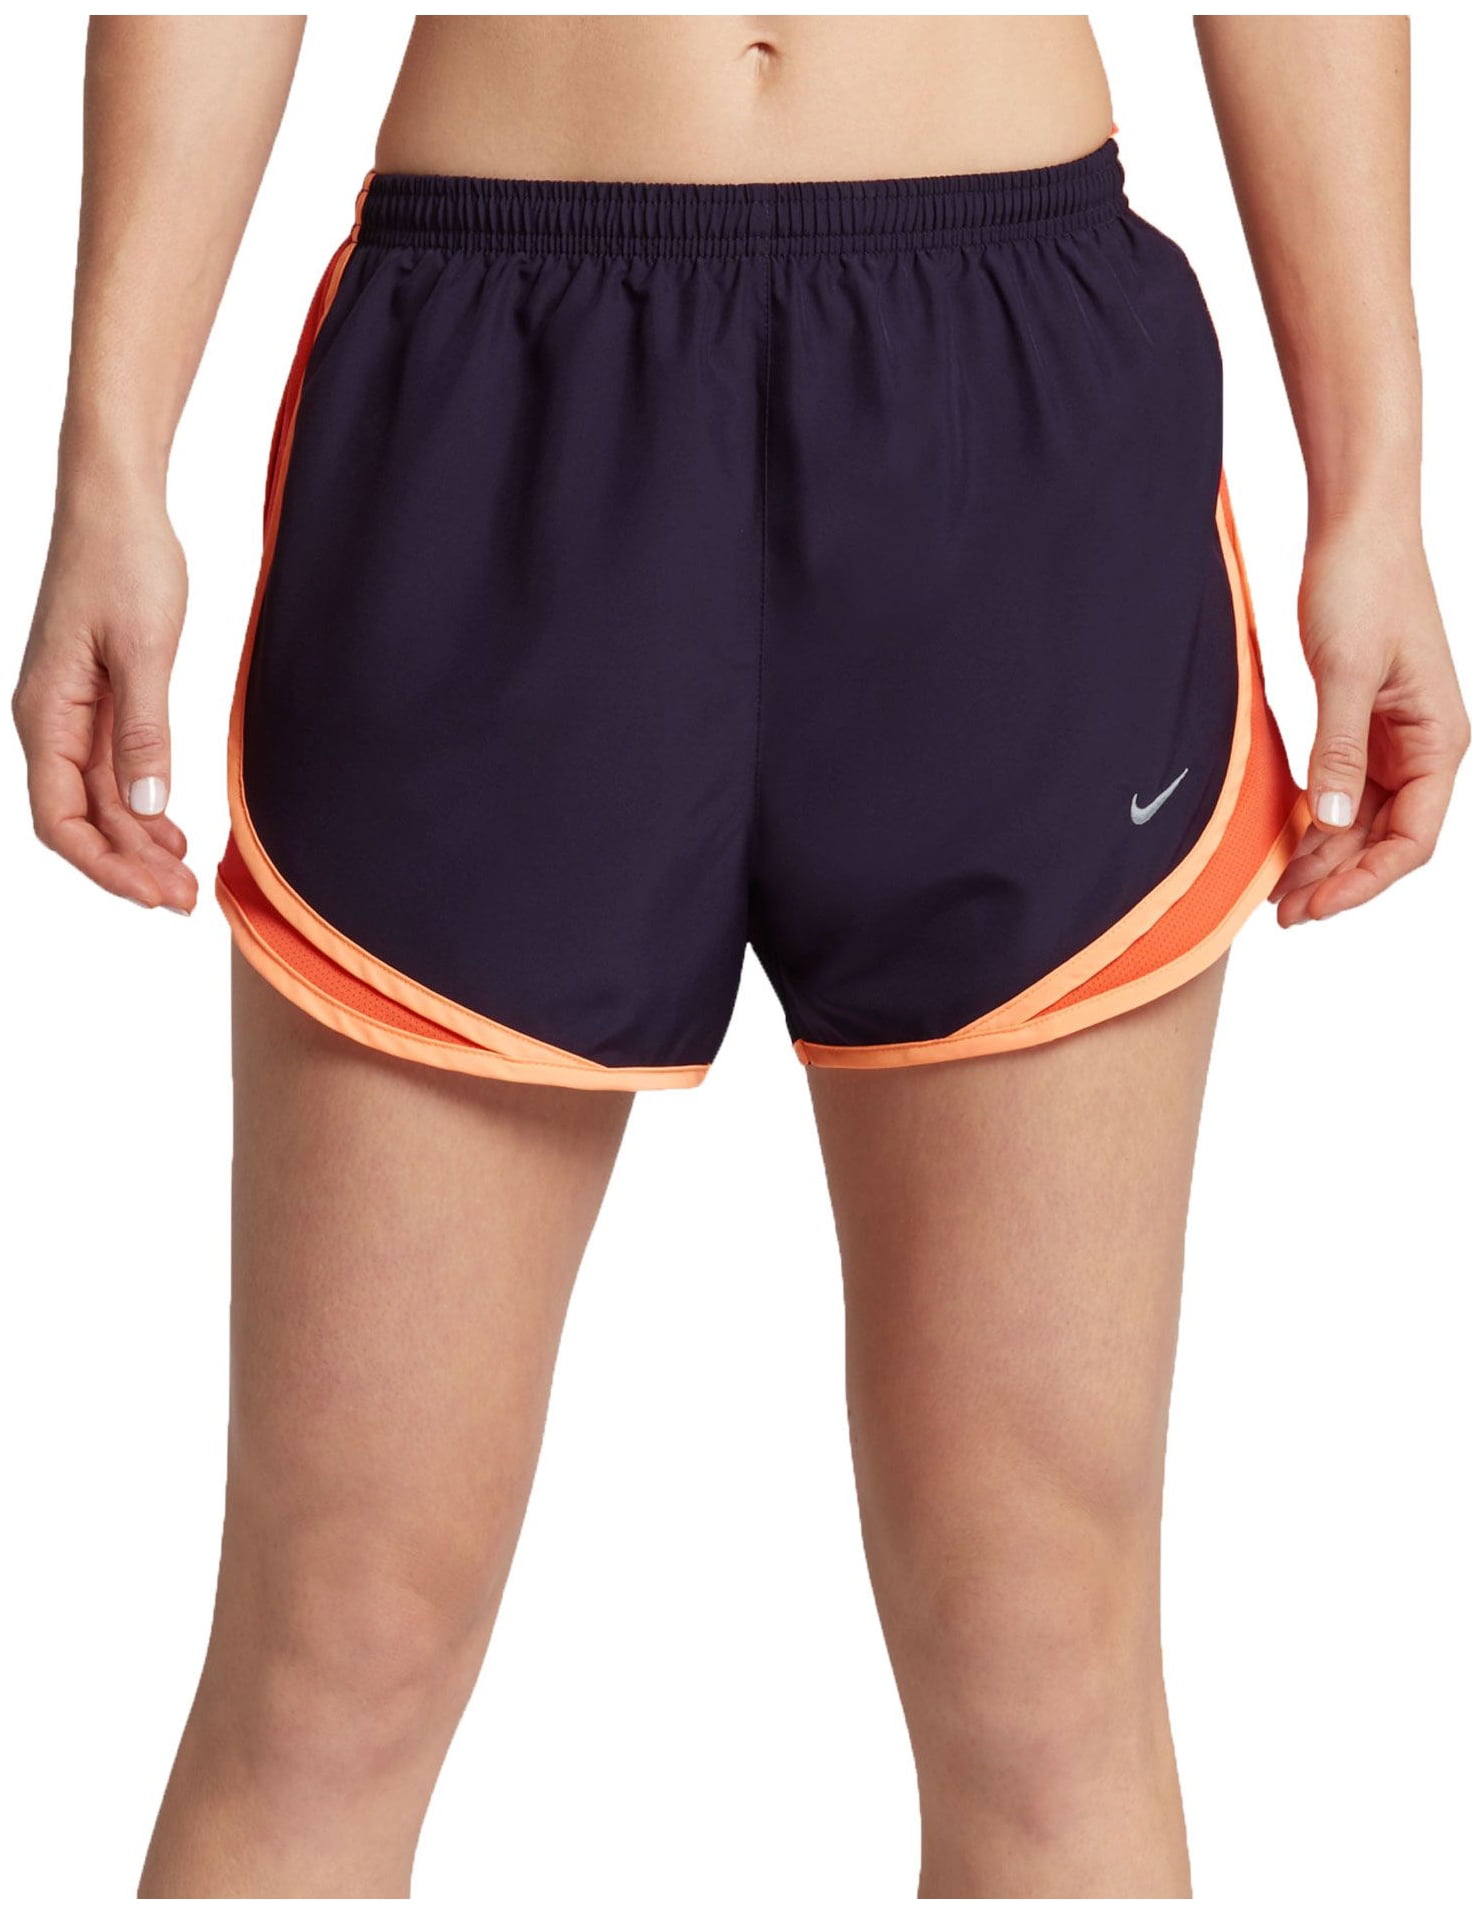 nike women's dry tempo shorts orange and black